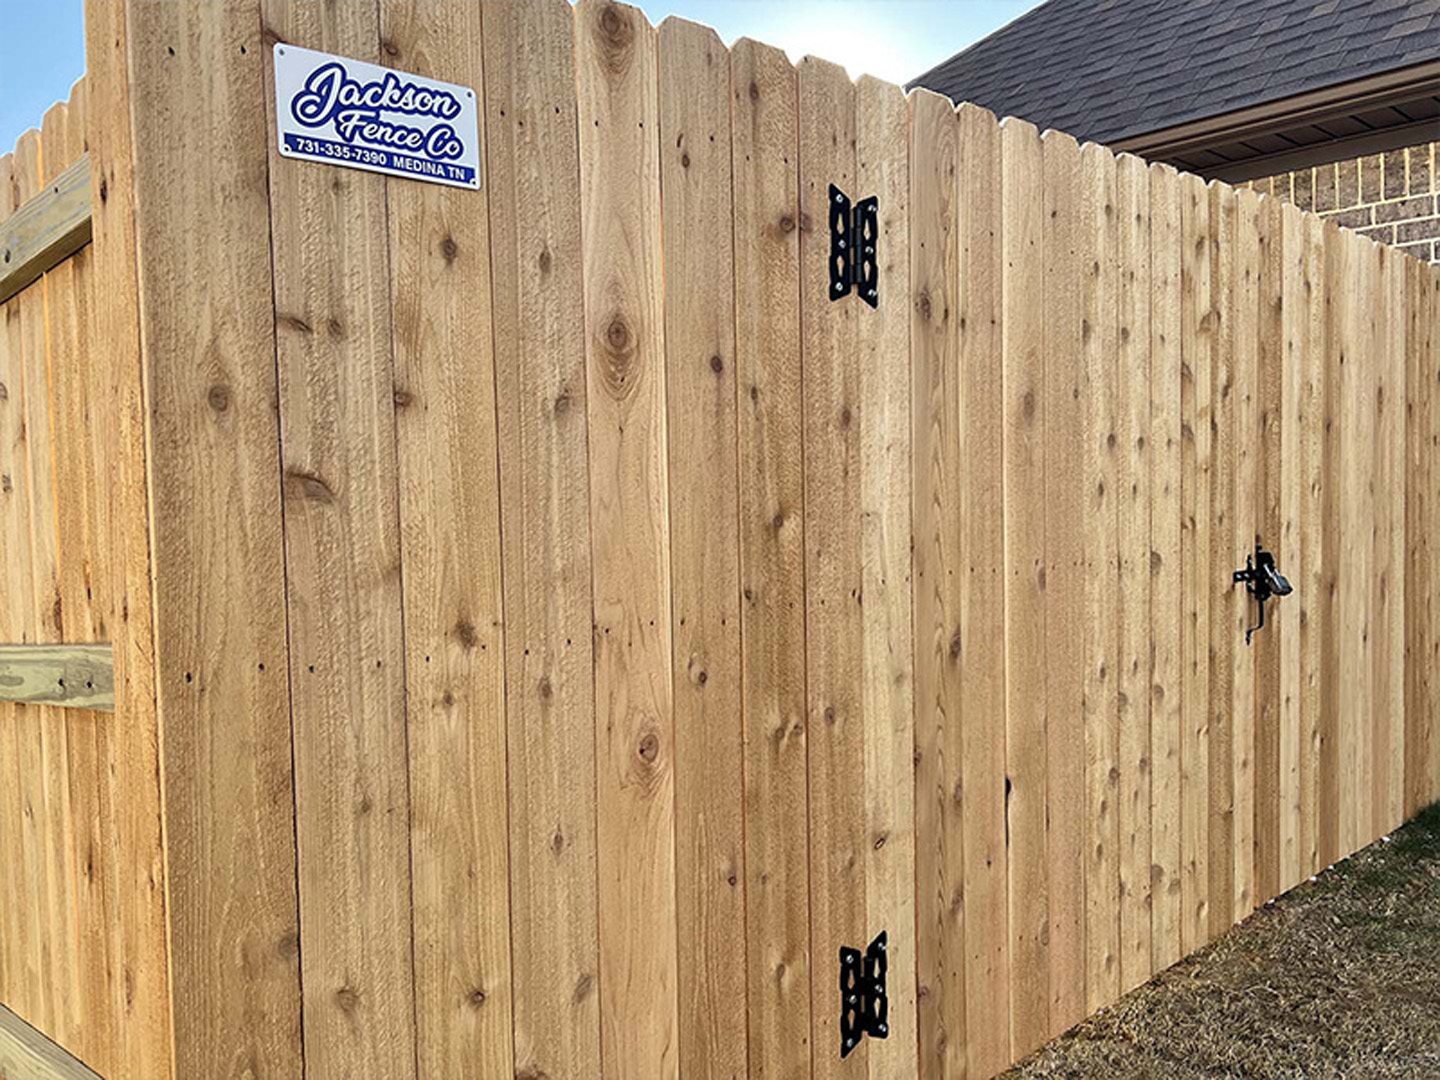  Trenton TN stockade style wood fence